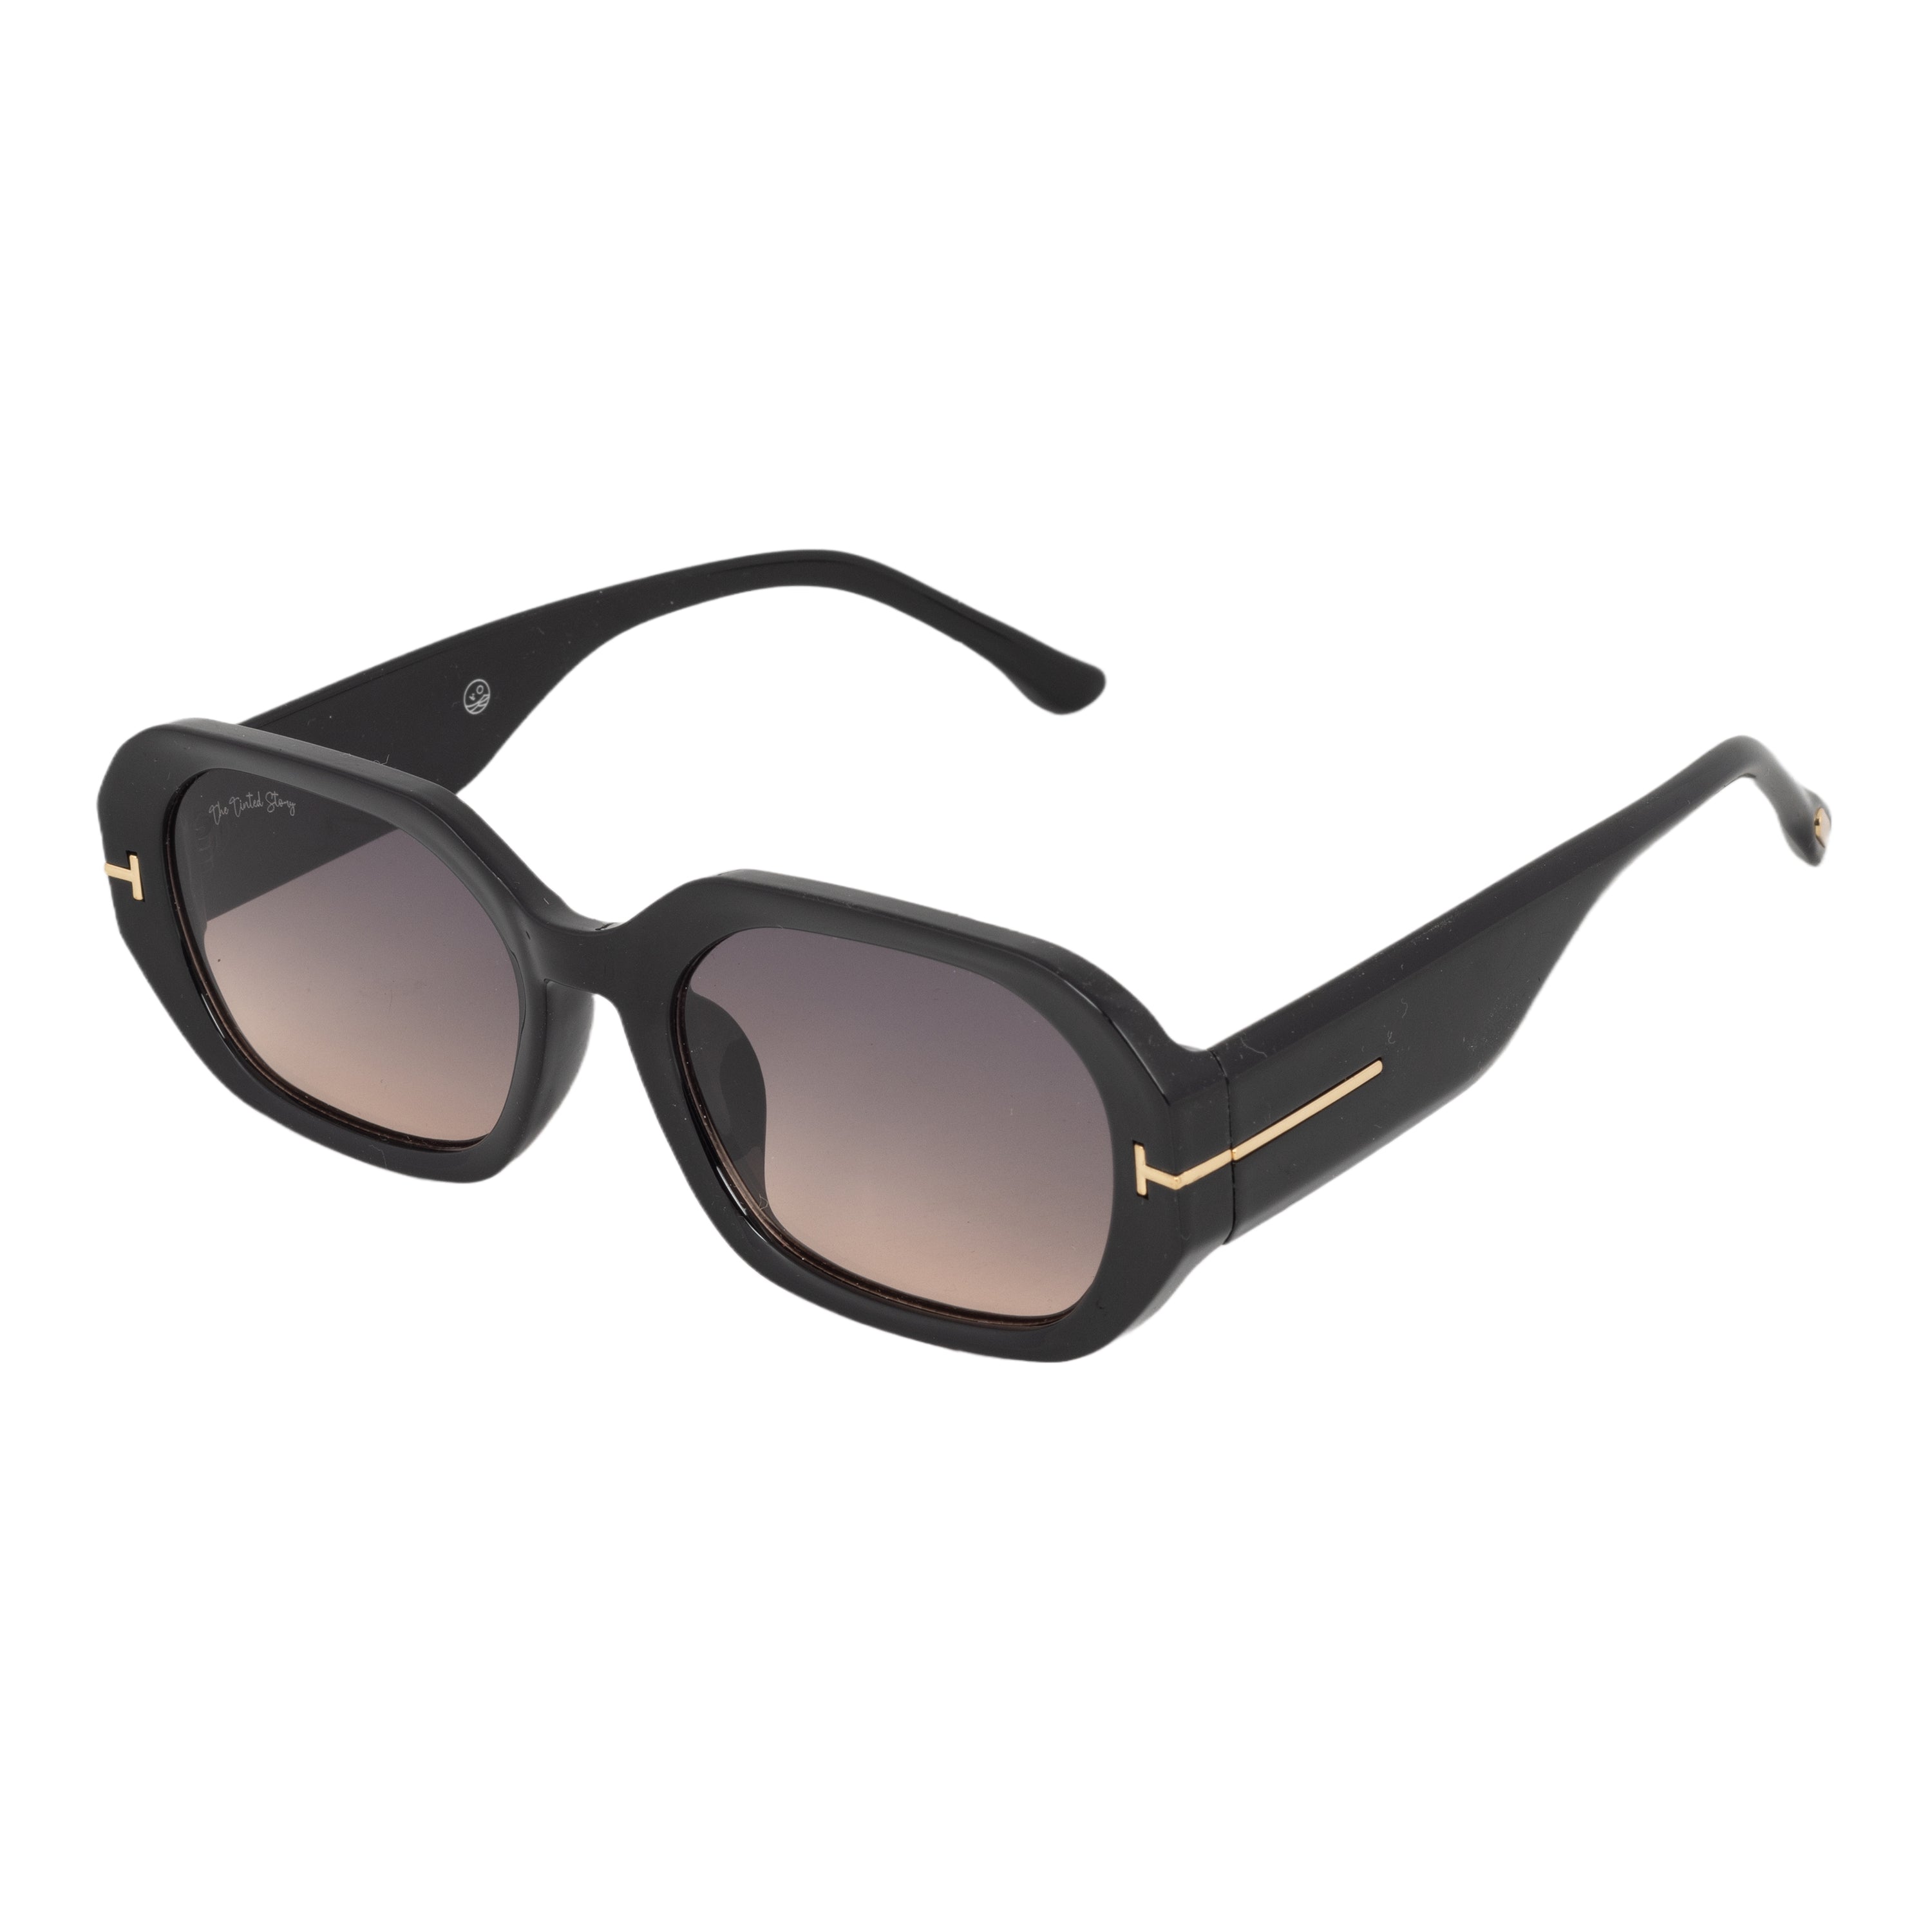 Norton Classic Sunglasses